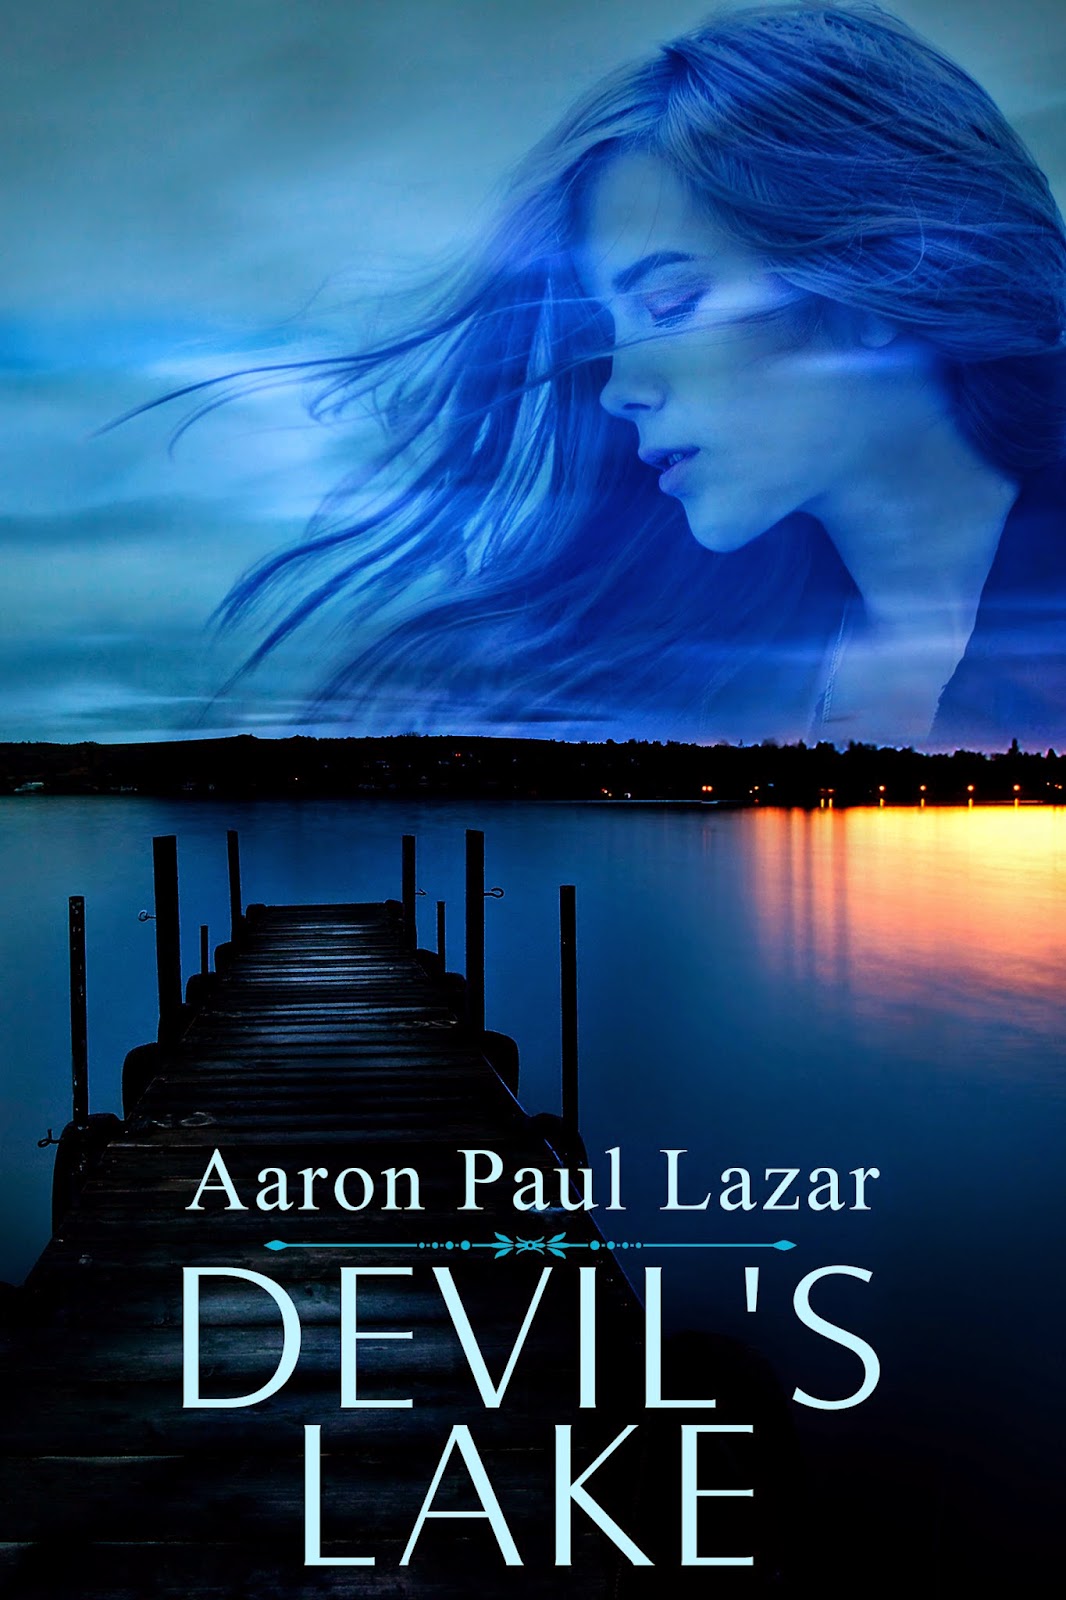 http://www.amazon.com/Devils-Lake-Aaron-Paul-Lazar-ebook/dp/B00LNFP8XU/ref=sr_1_1?s=digital-text&ie=UTF8&qid=1406900868&sr=1-1&keywords=devil%27s+lake